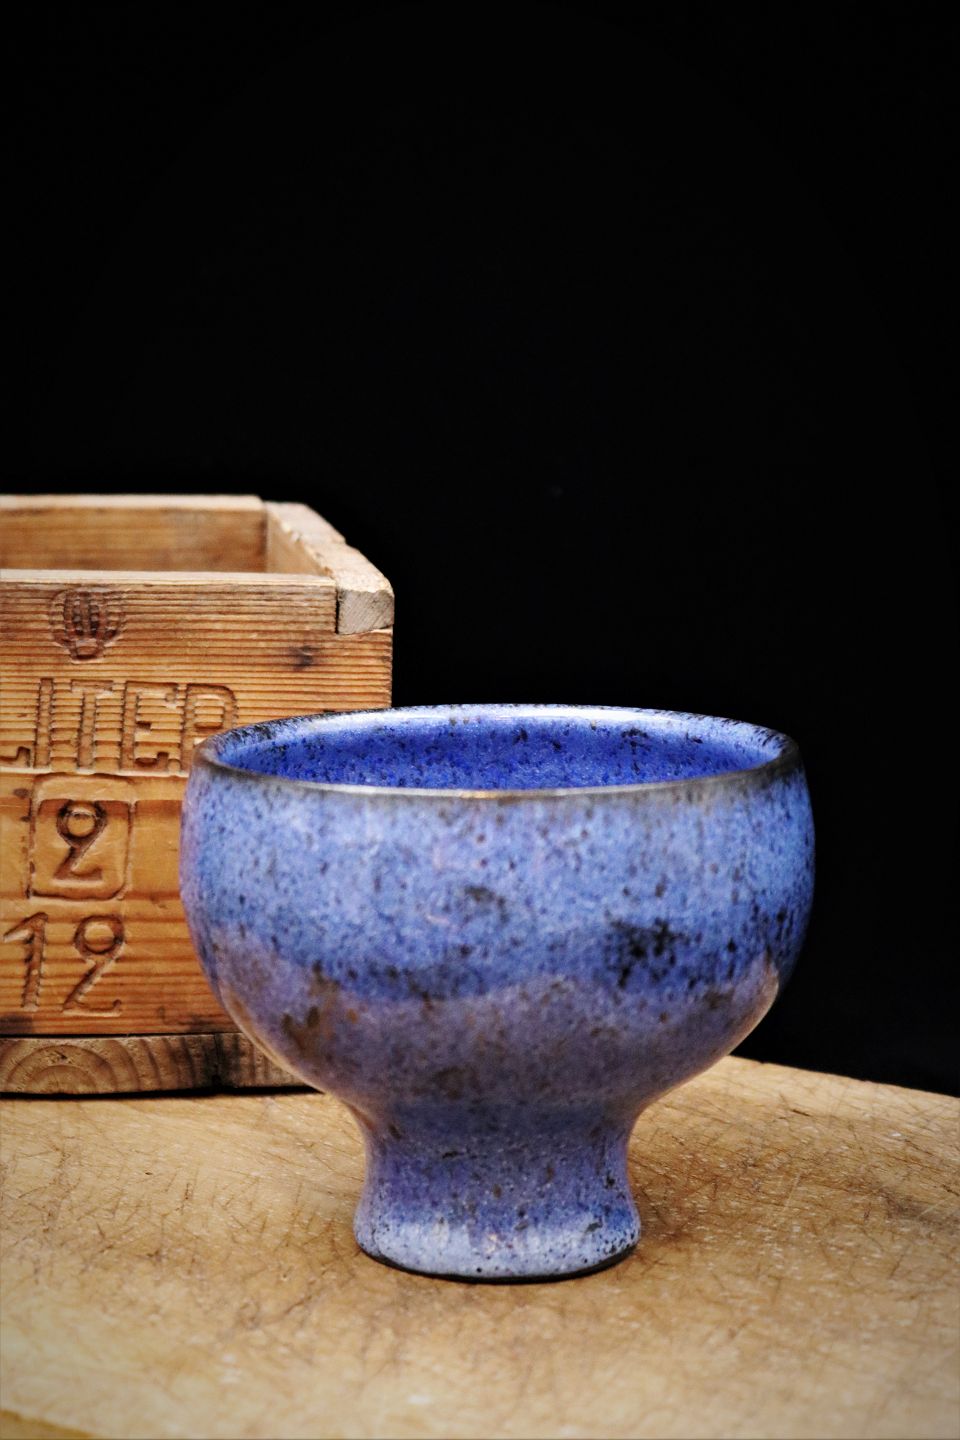 Hukommelse badning Mundtlig K&Co - Royal Copenhagen keramik skål med fin blå glasur...